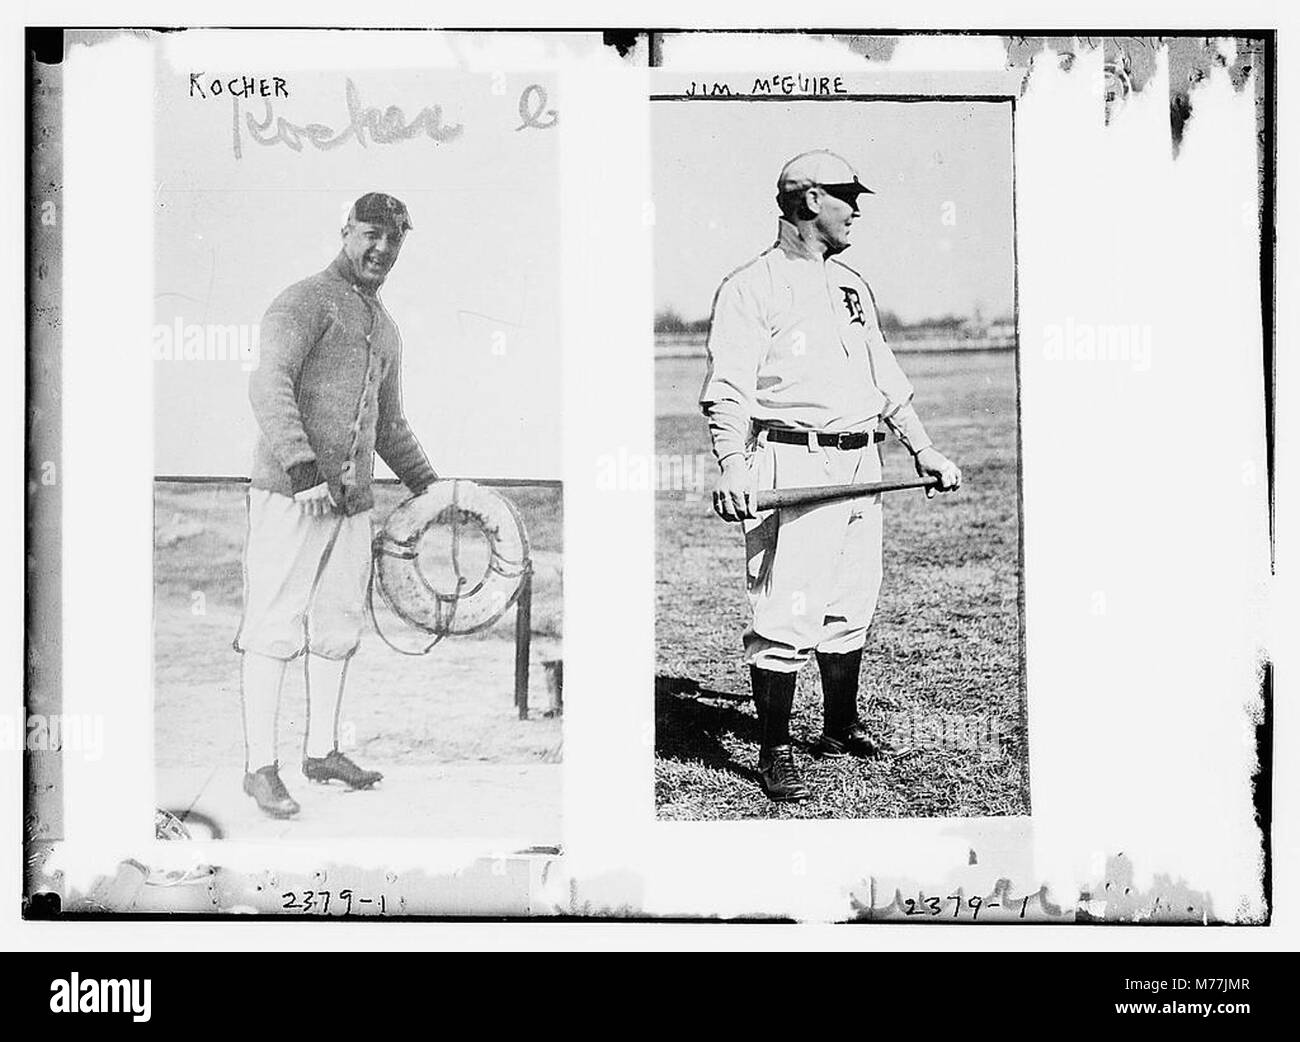 Brad Kocher, Detroit AL (baseball) RCAC2014690236 Banque D'Images